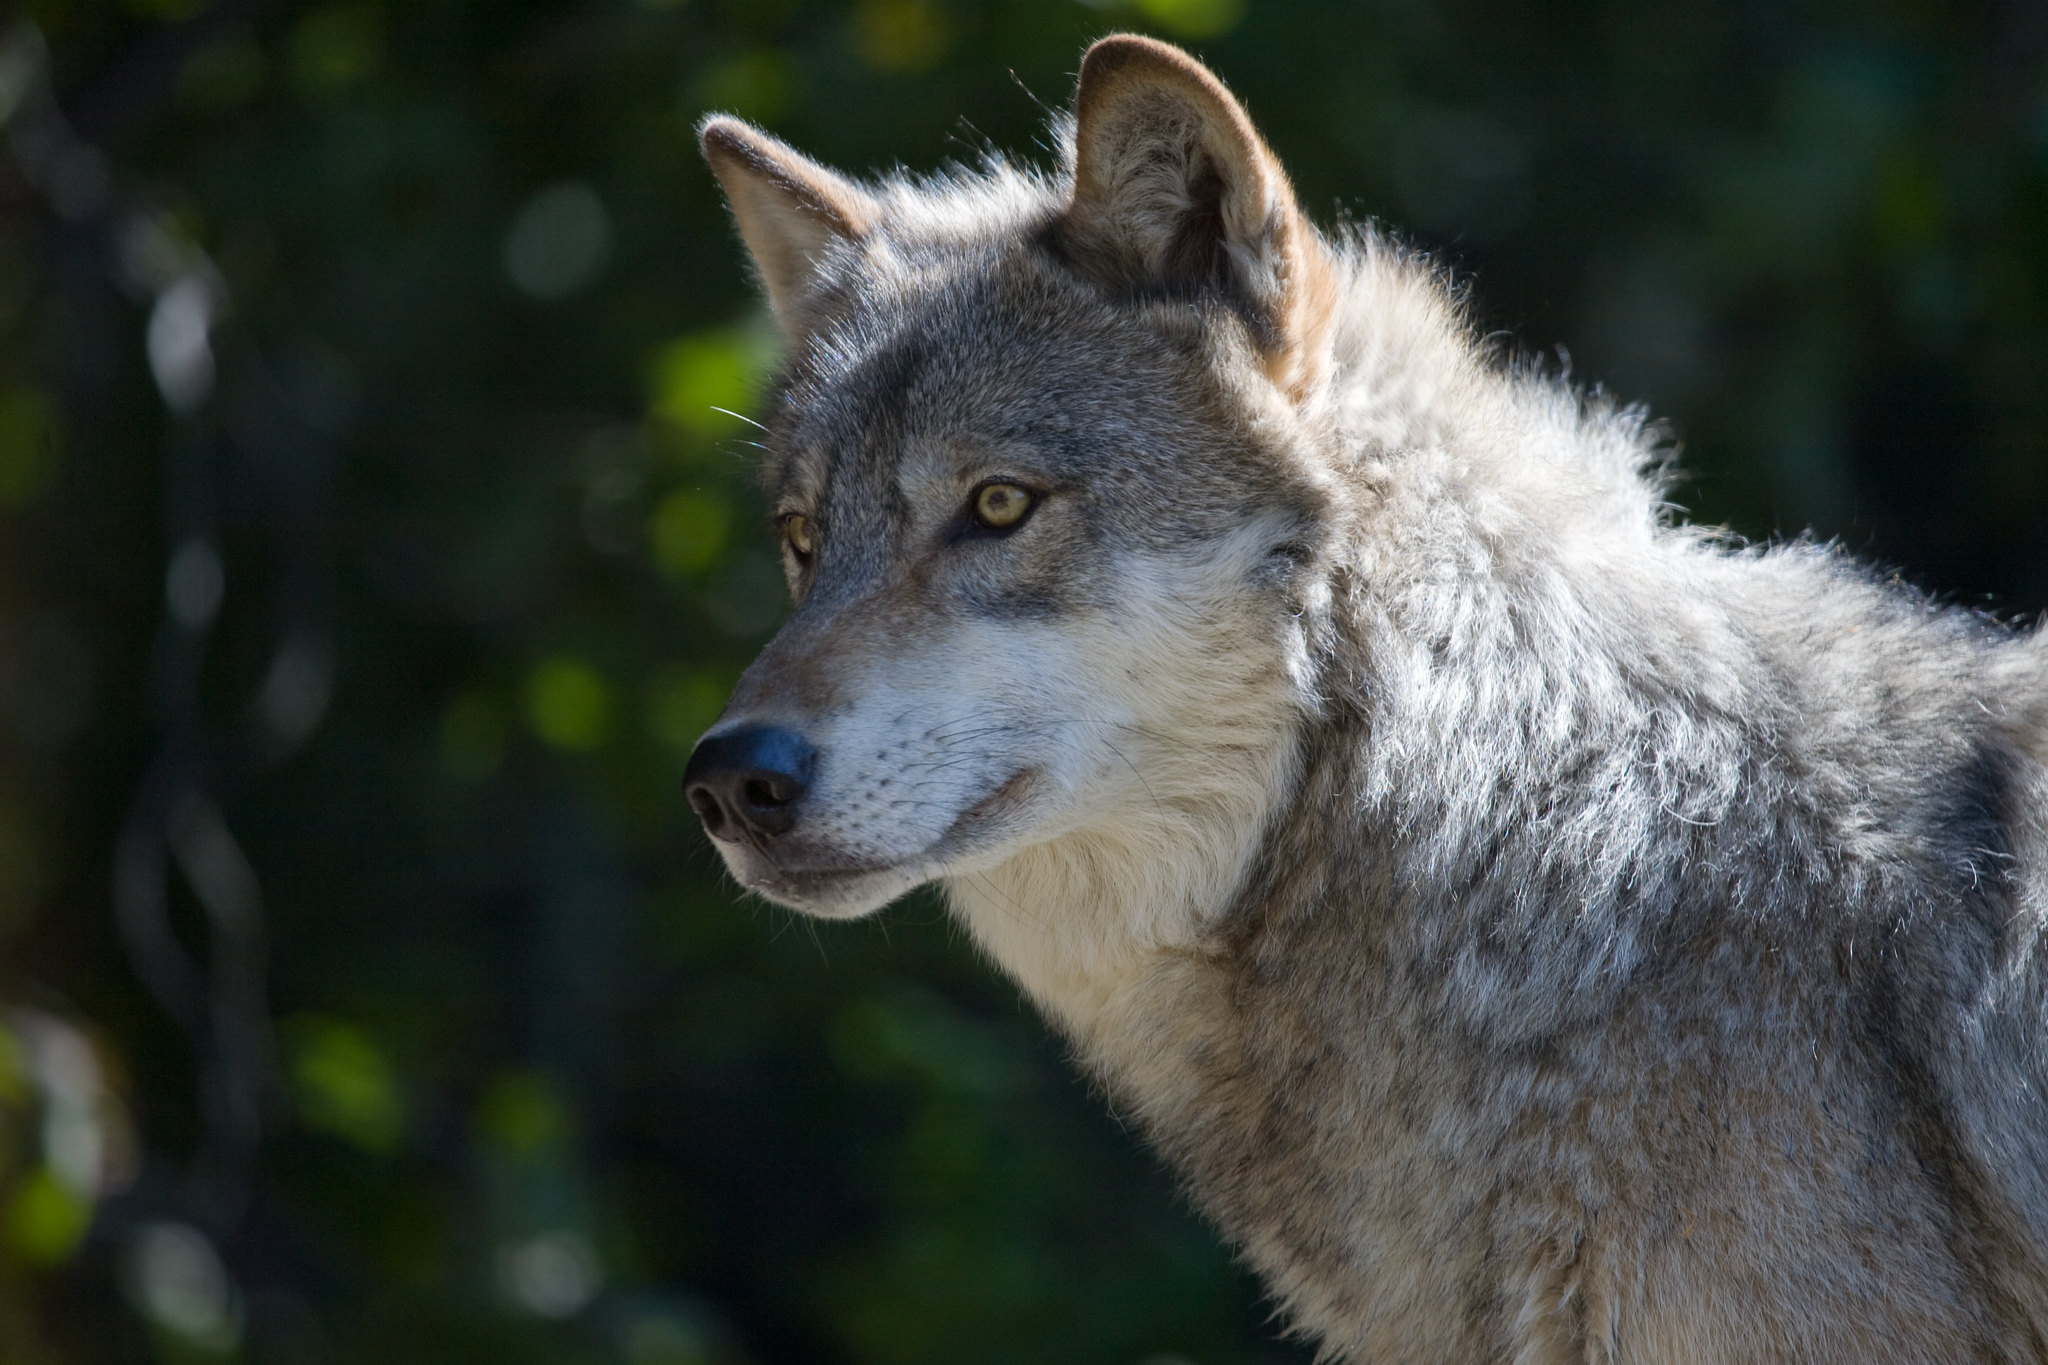 Wisconsin wildlife regulators unveil revised draft of wolf management plan